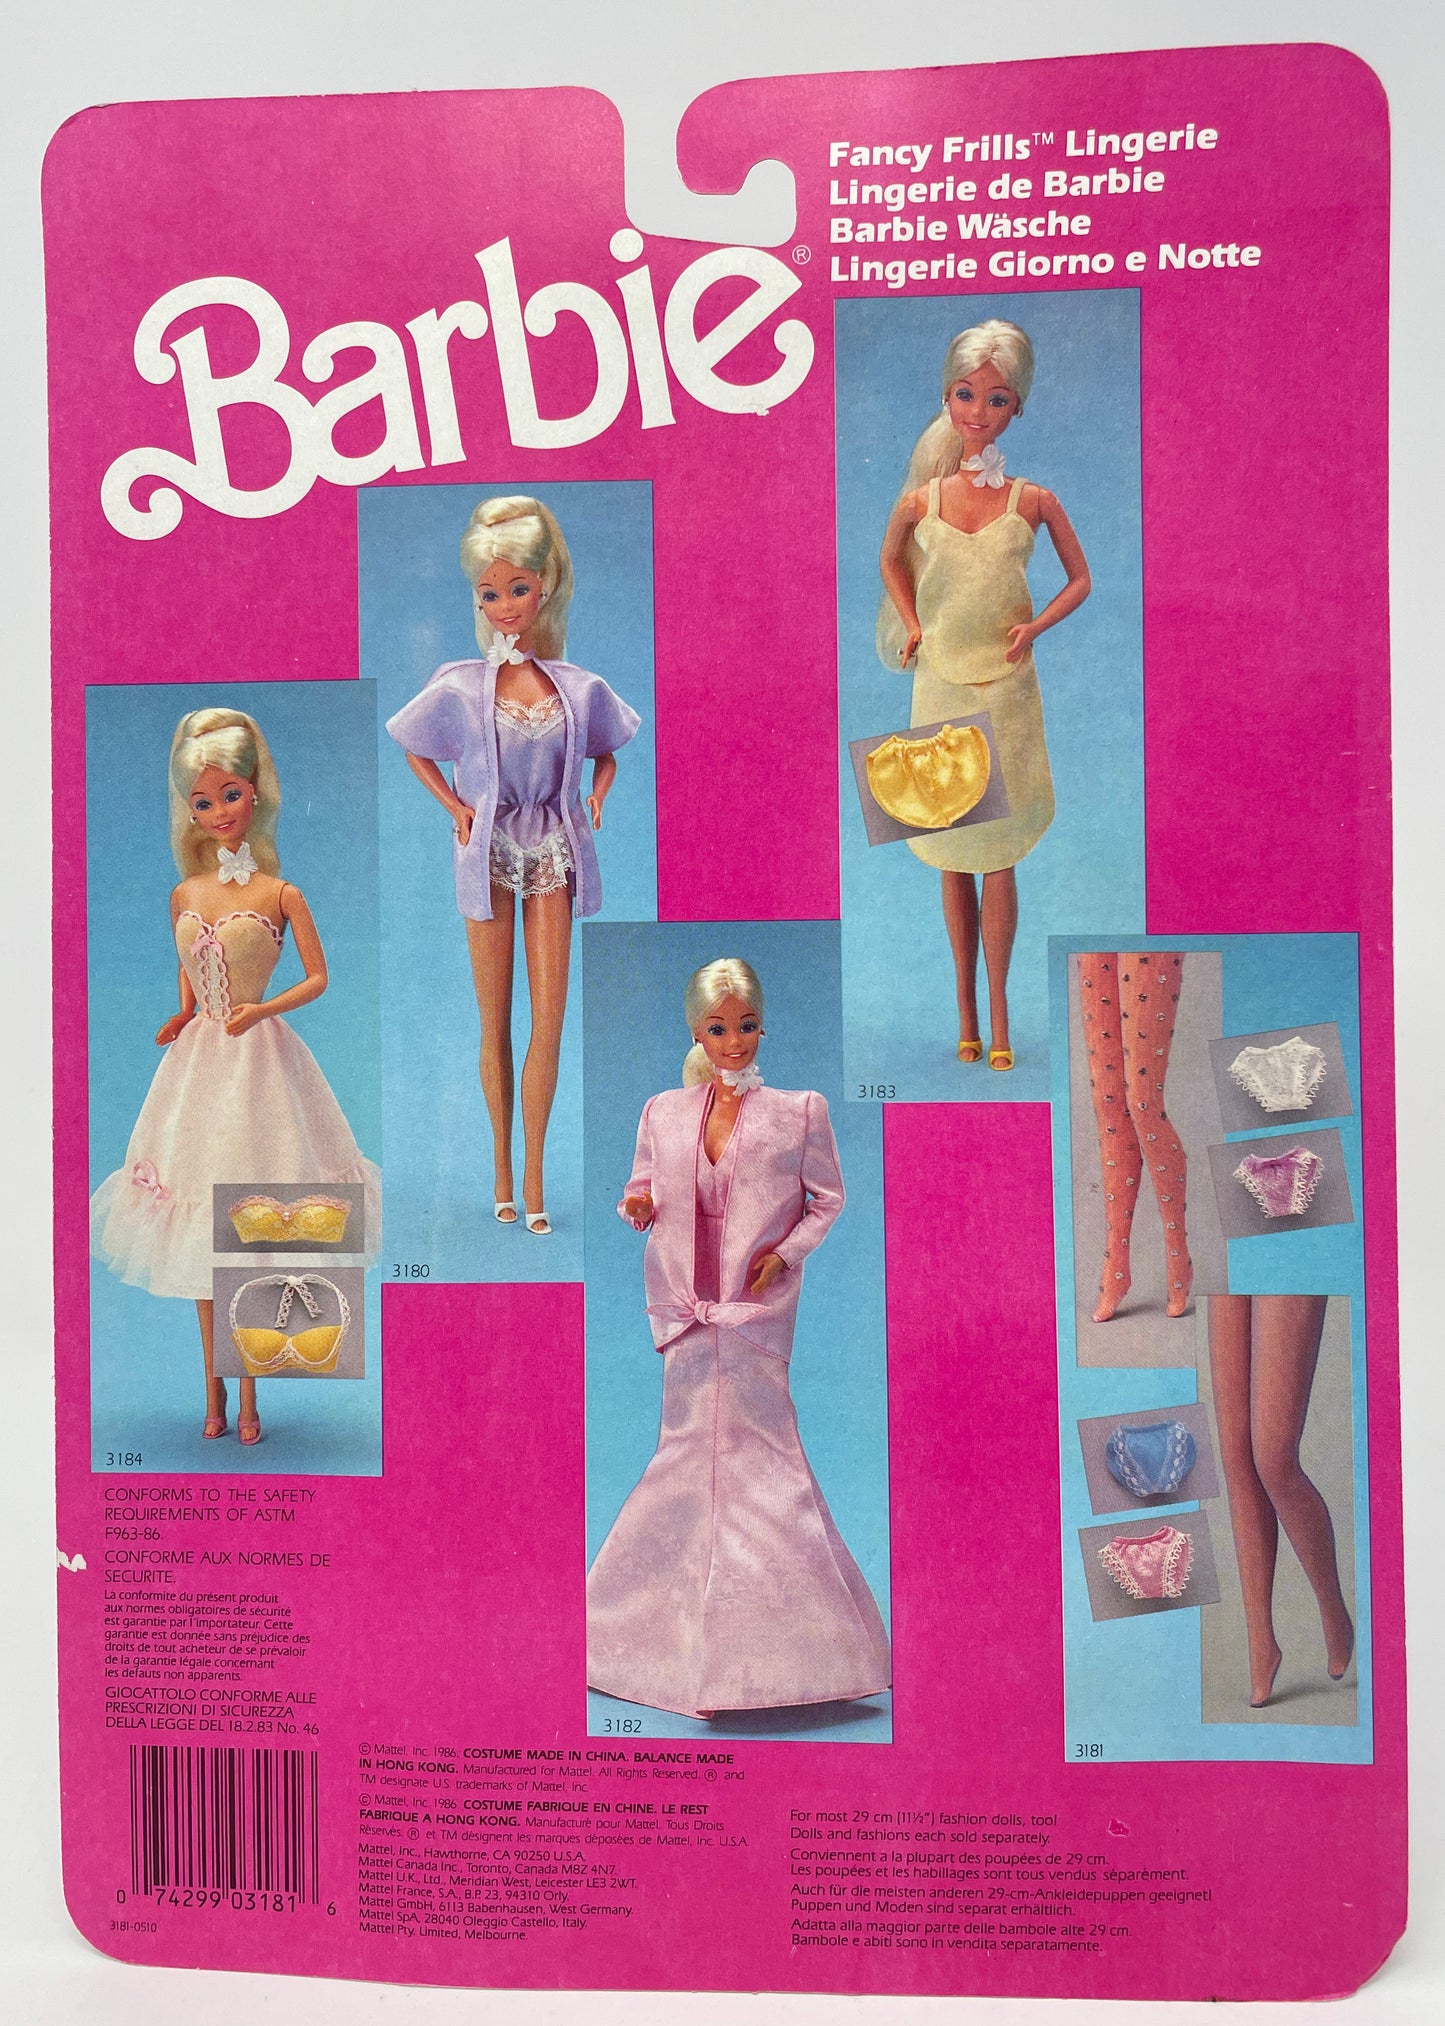 BARBIE - FANCY FRILLS LINGERIE #3181 - TIGHTS/PANTIES/SHOES - MATTEL 1986 (1 of 2)